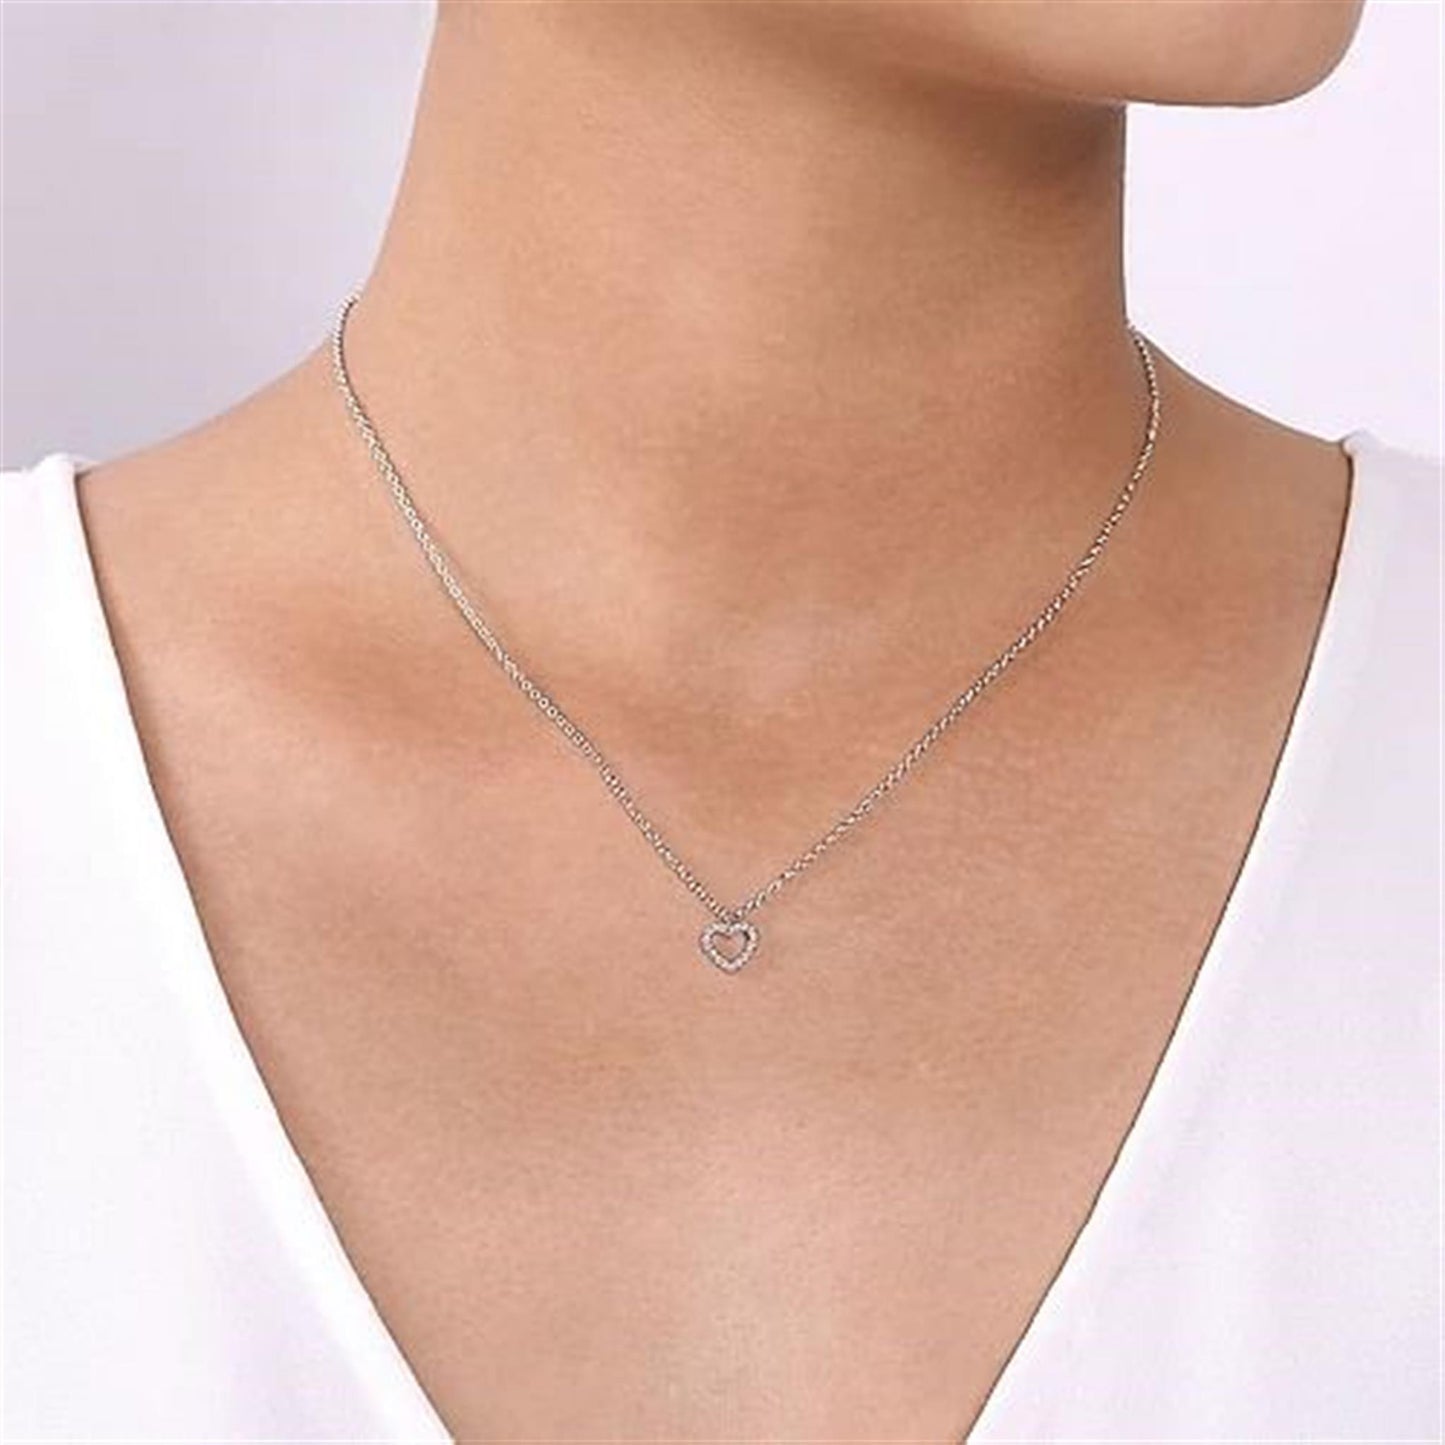 Gabriel & Co. White Gold Open Heart Diamond Pendant Necklace